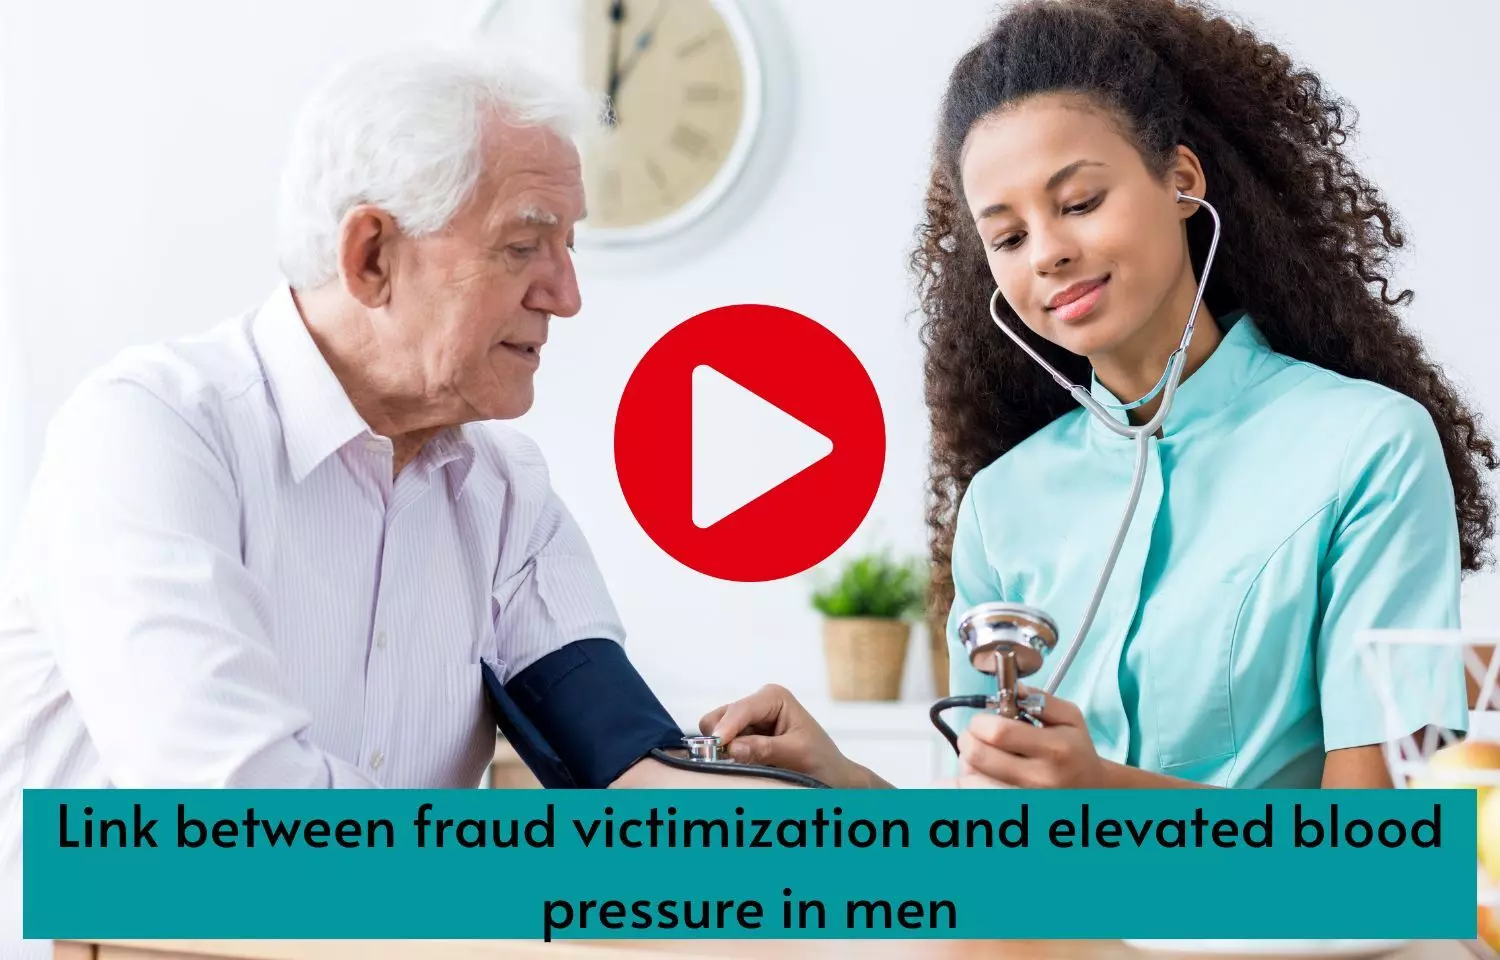 Link between fraud victimization and elevated blood pressure in men